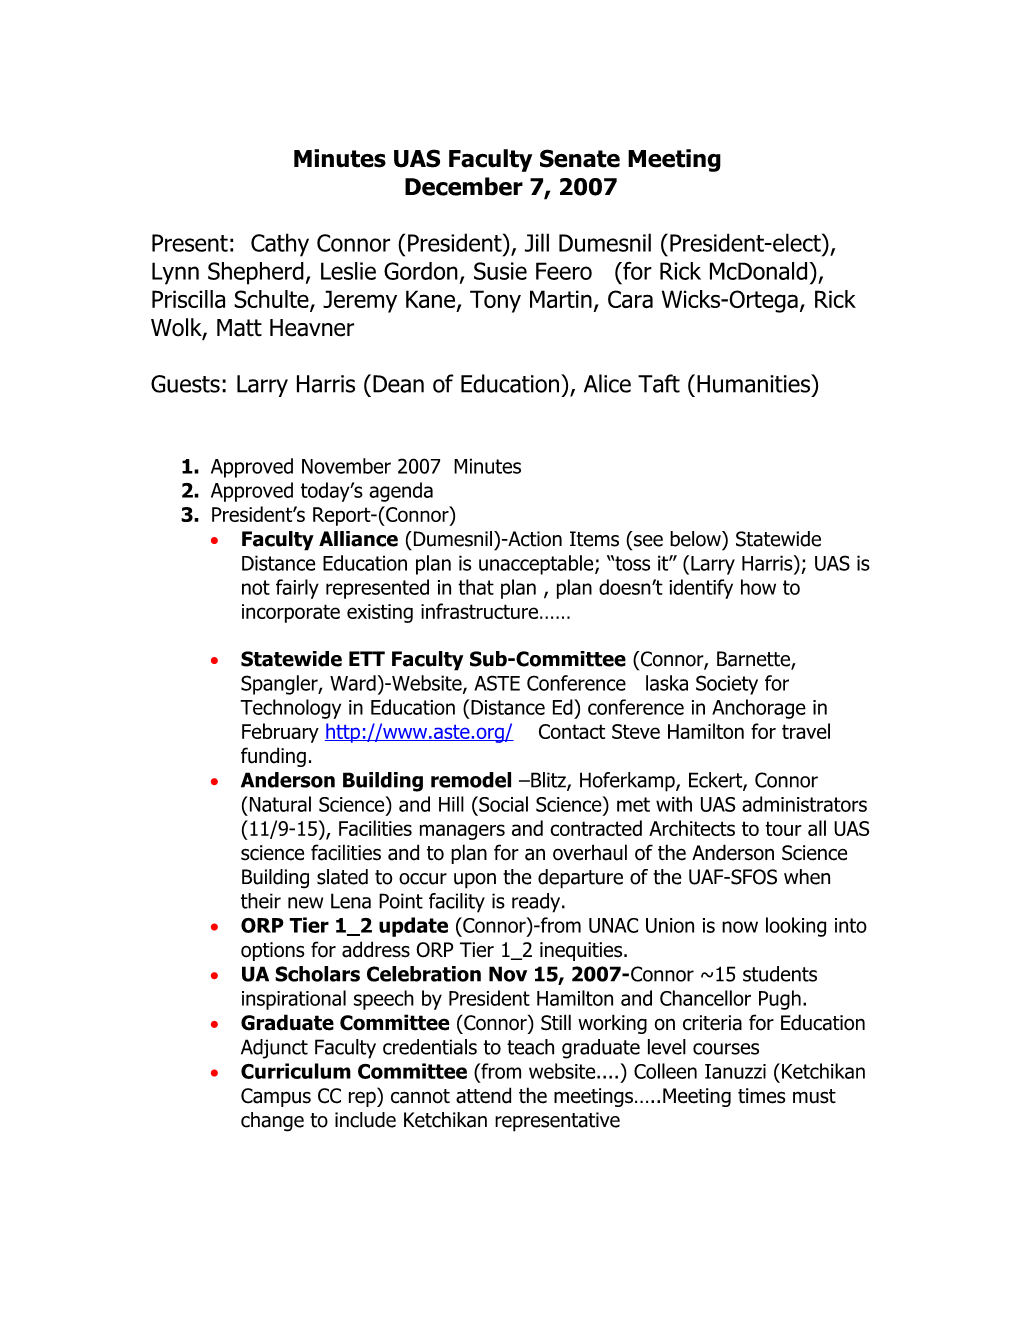 Agenda UAS Faculty Senate Meeting December 7